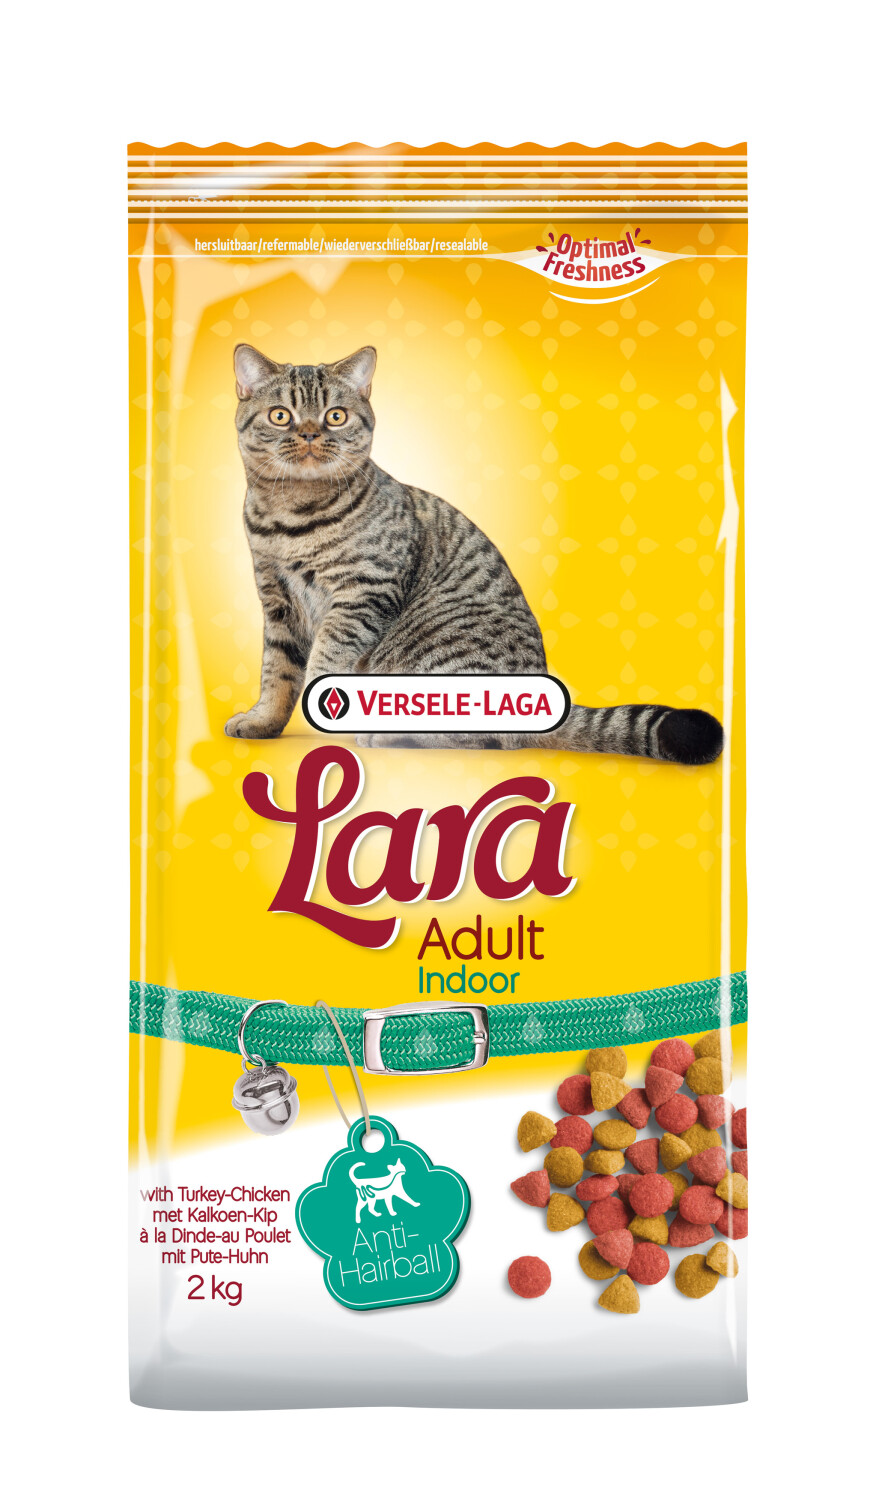 Afbeelding Versele-Laga Lara Indoor kattenvoer 2 kg door Tuinadvies.be